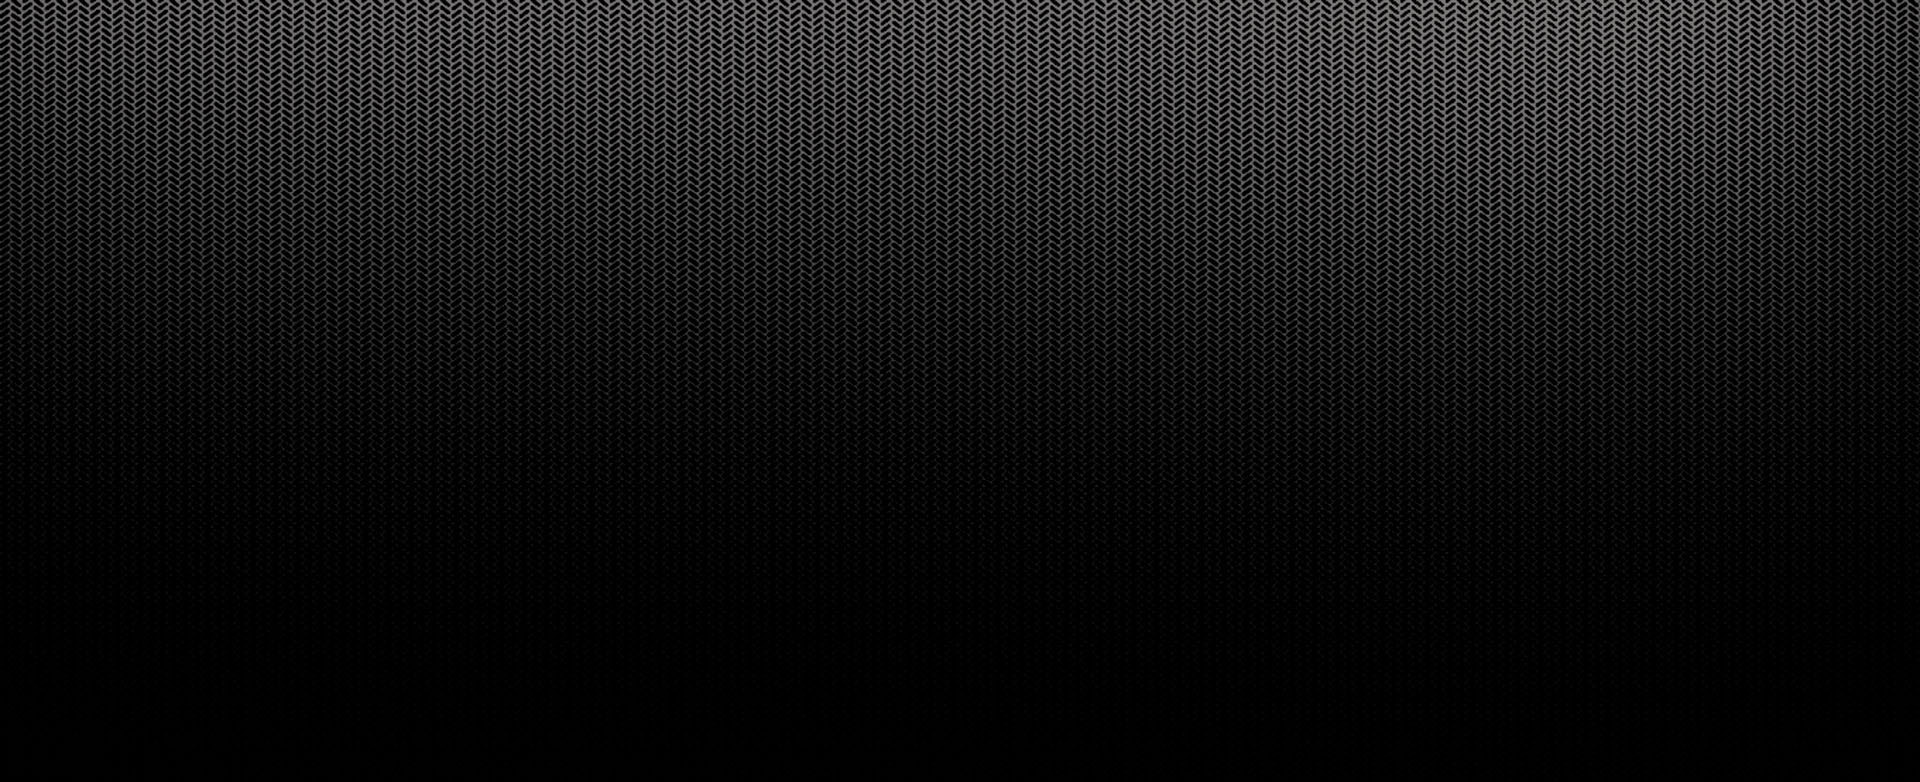 Black Background HD Wallpaper HDblackwallpaper